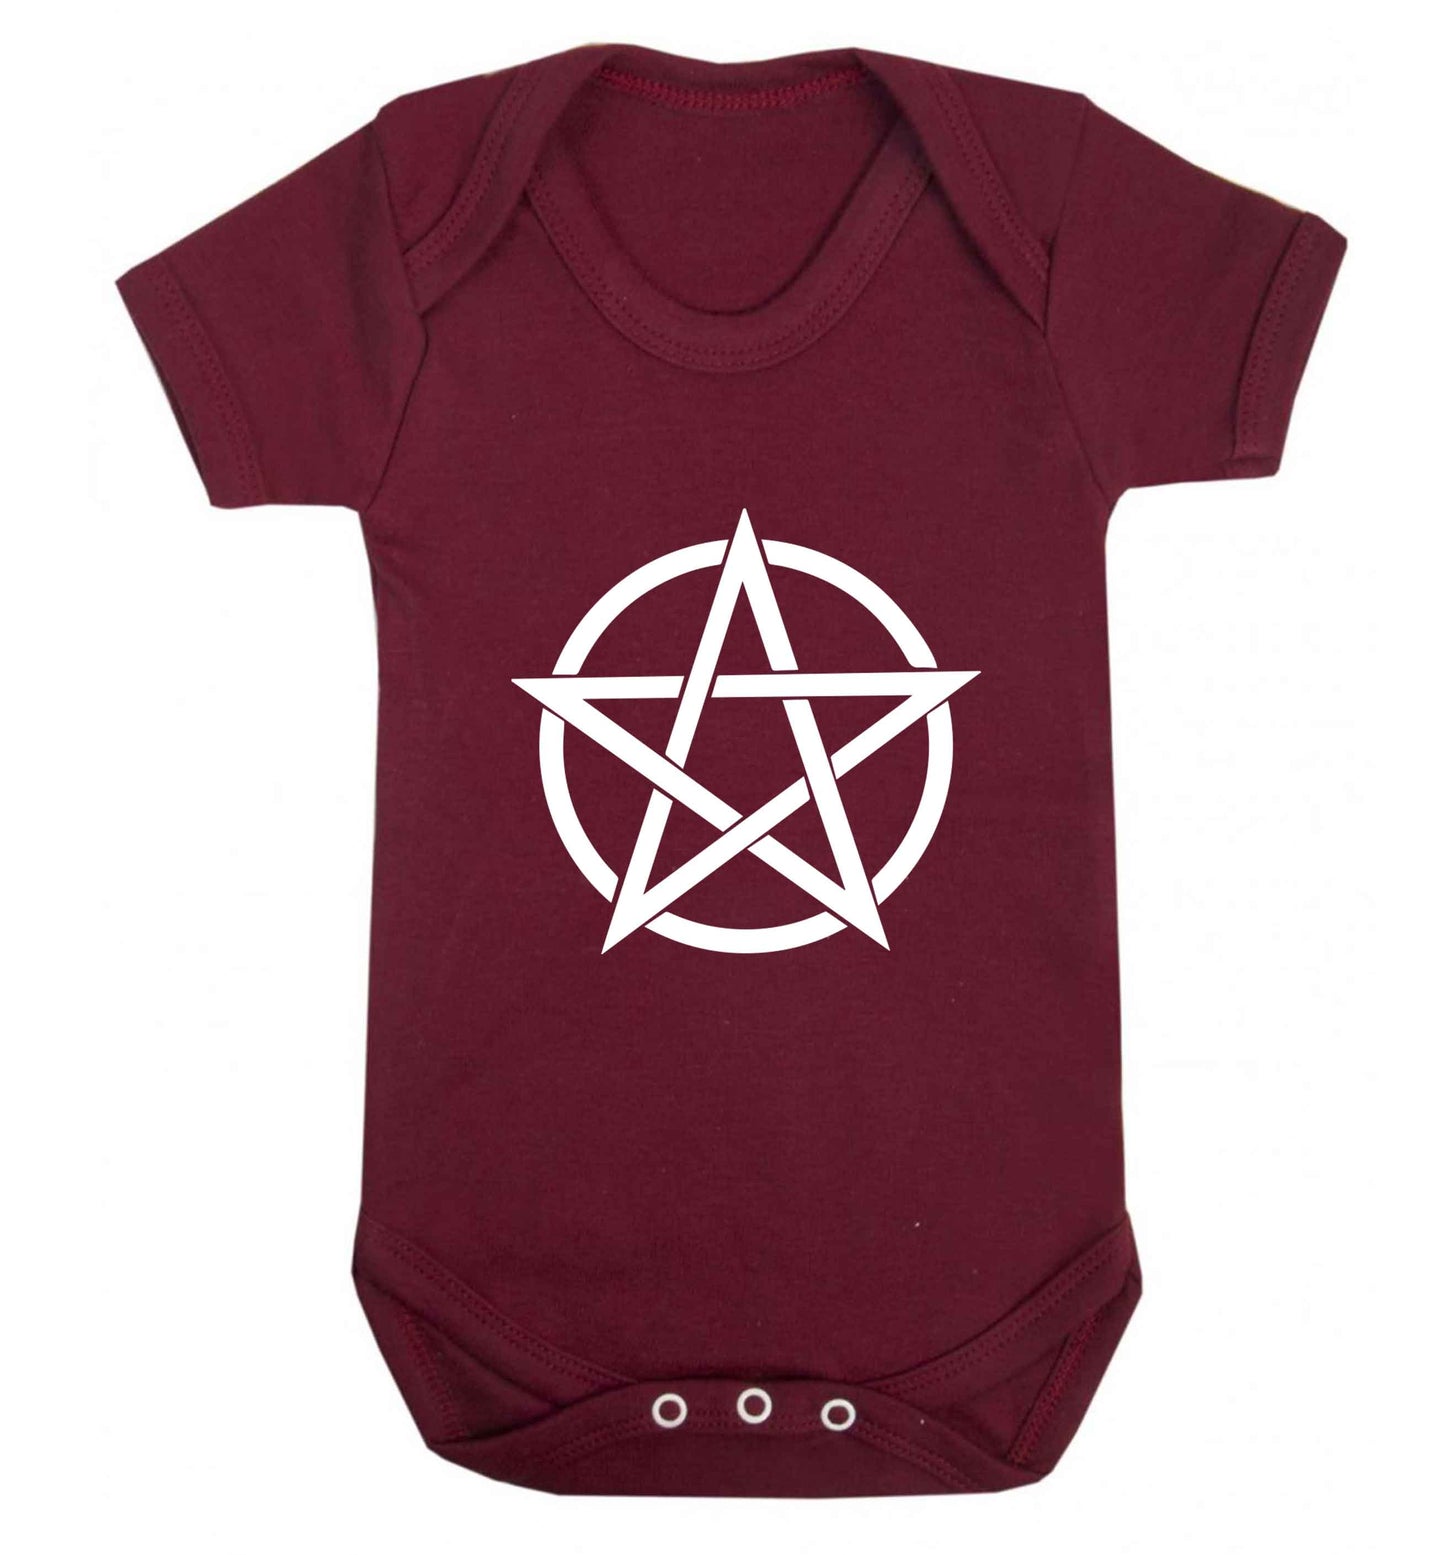 Pentagram symbol baby vest maroon 18-24 months